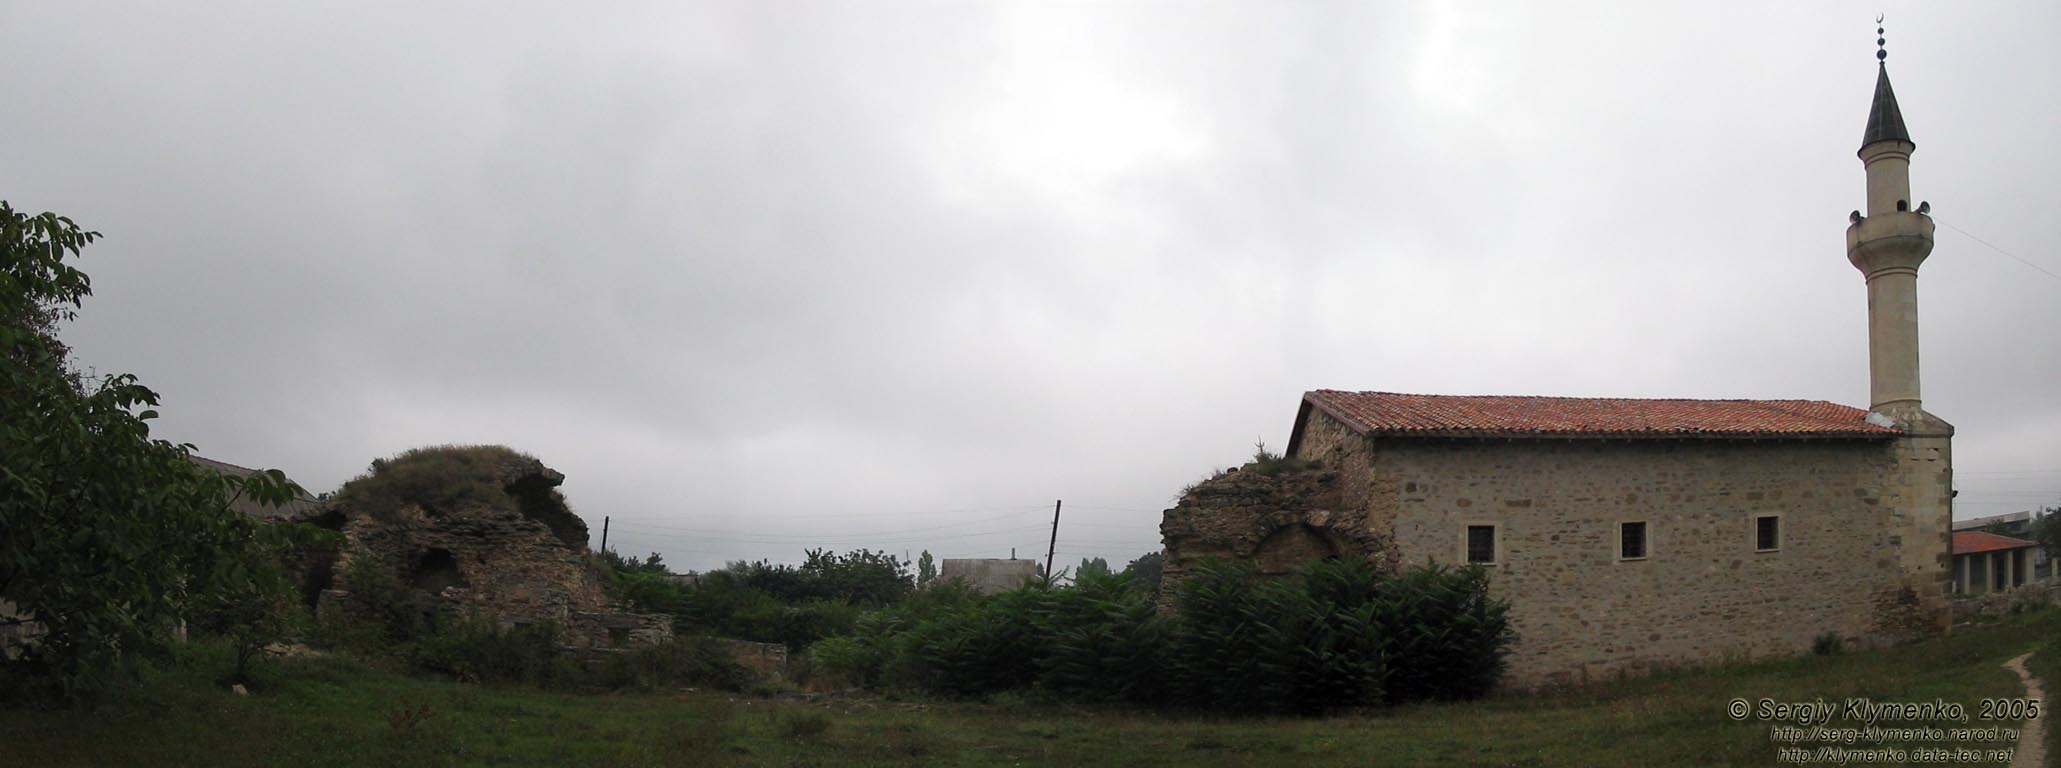 Старый Крым, мечеть хана Узбека и руины медресе, памятник архитектуры 1314 г.